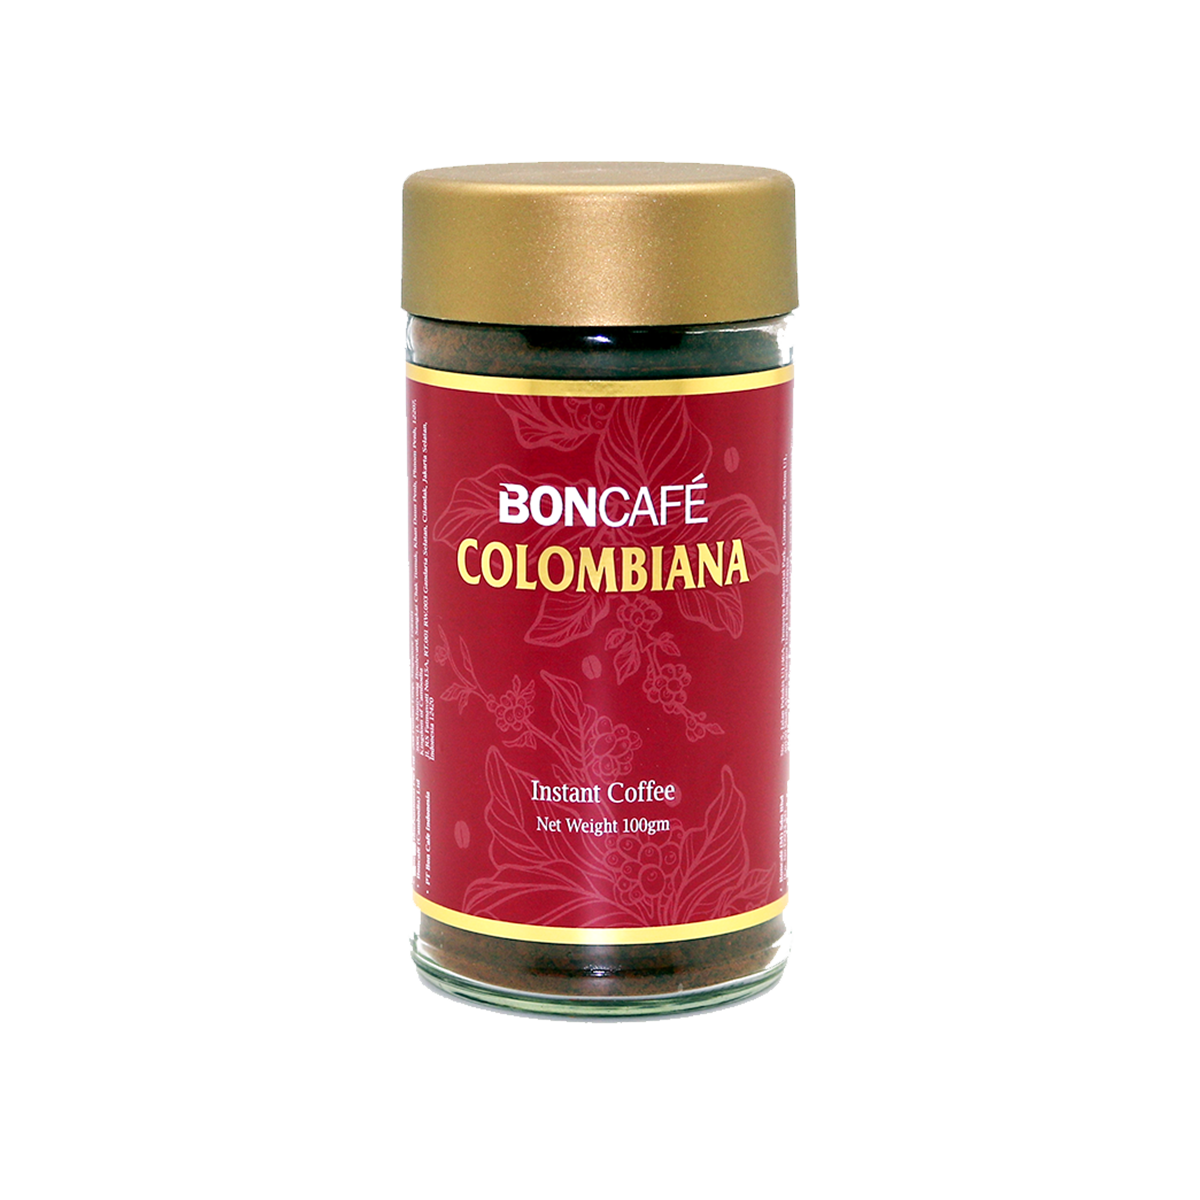 Boncafé - Colombiana Instant Coffee